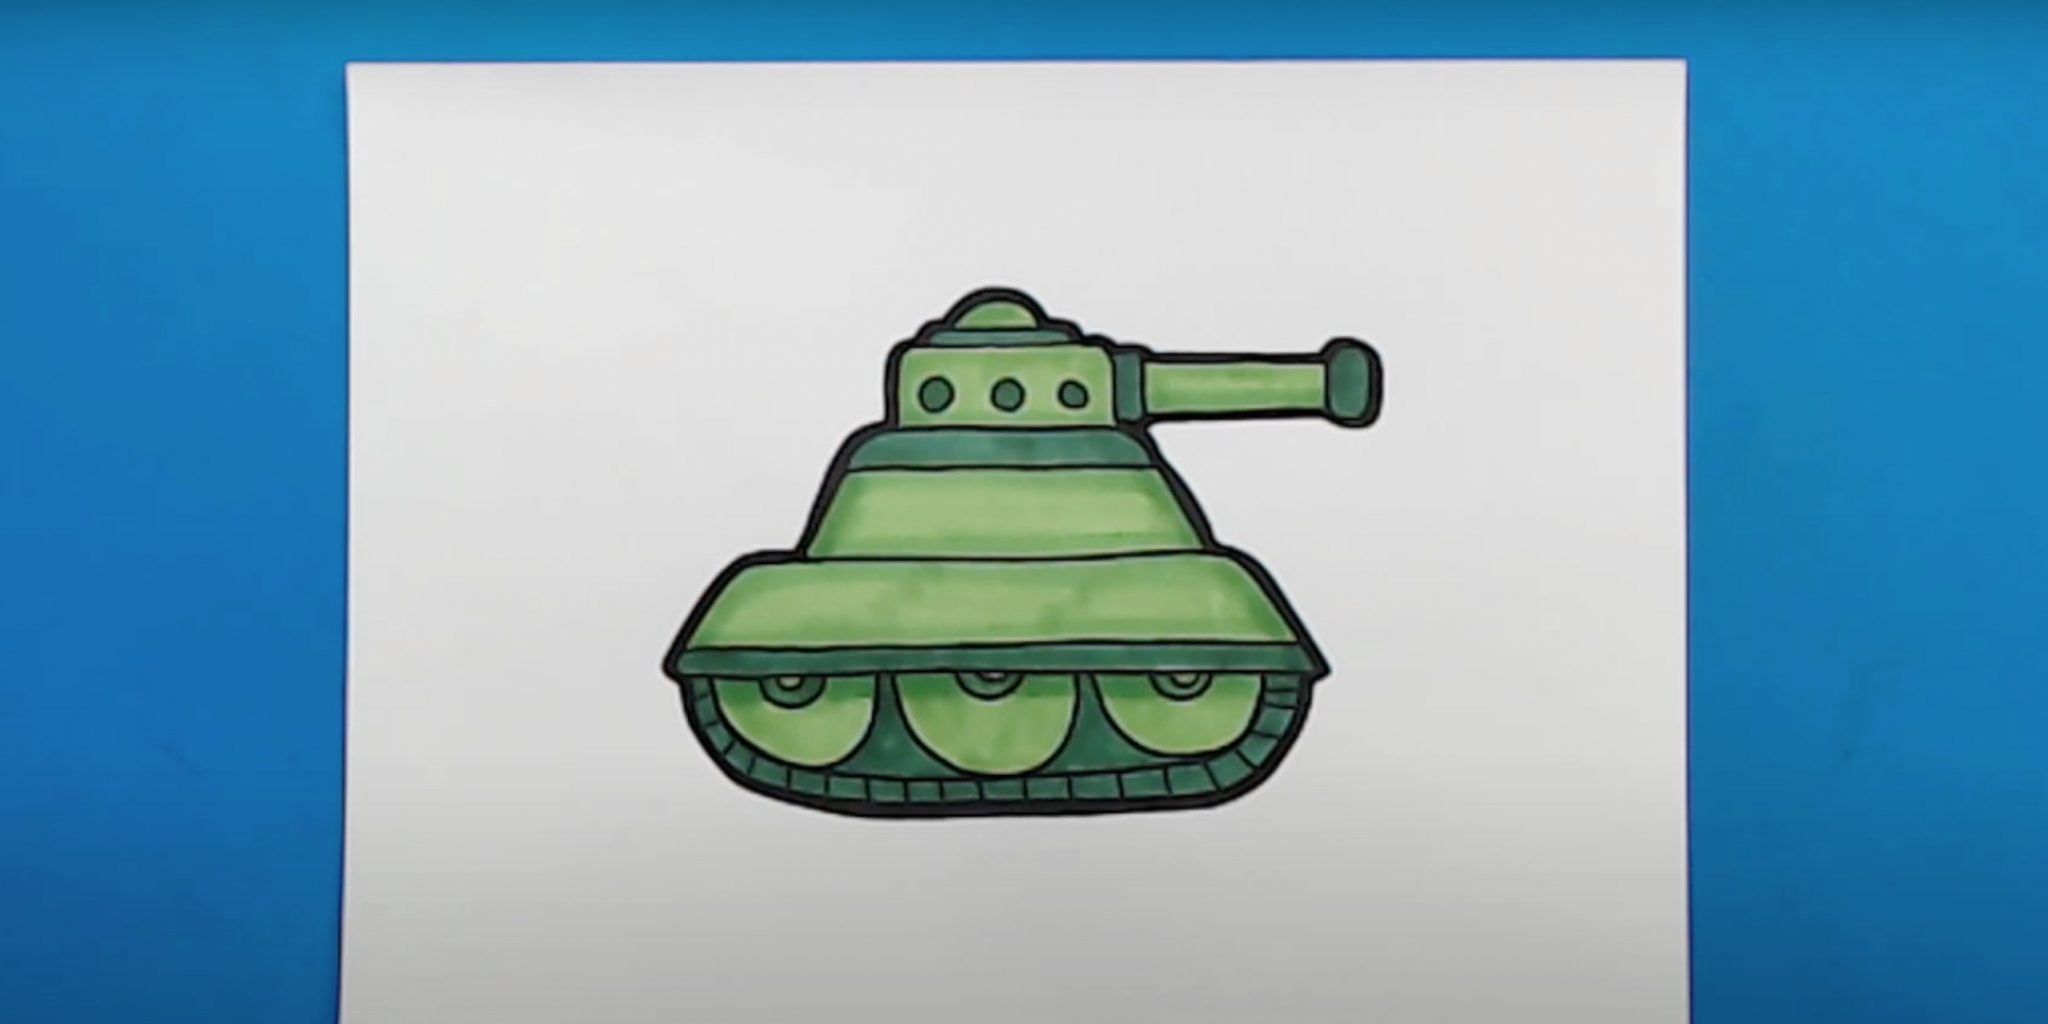 Рисунок танка фломастерами